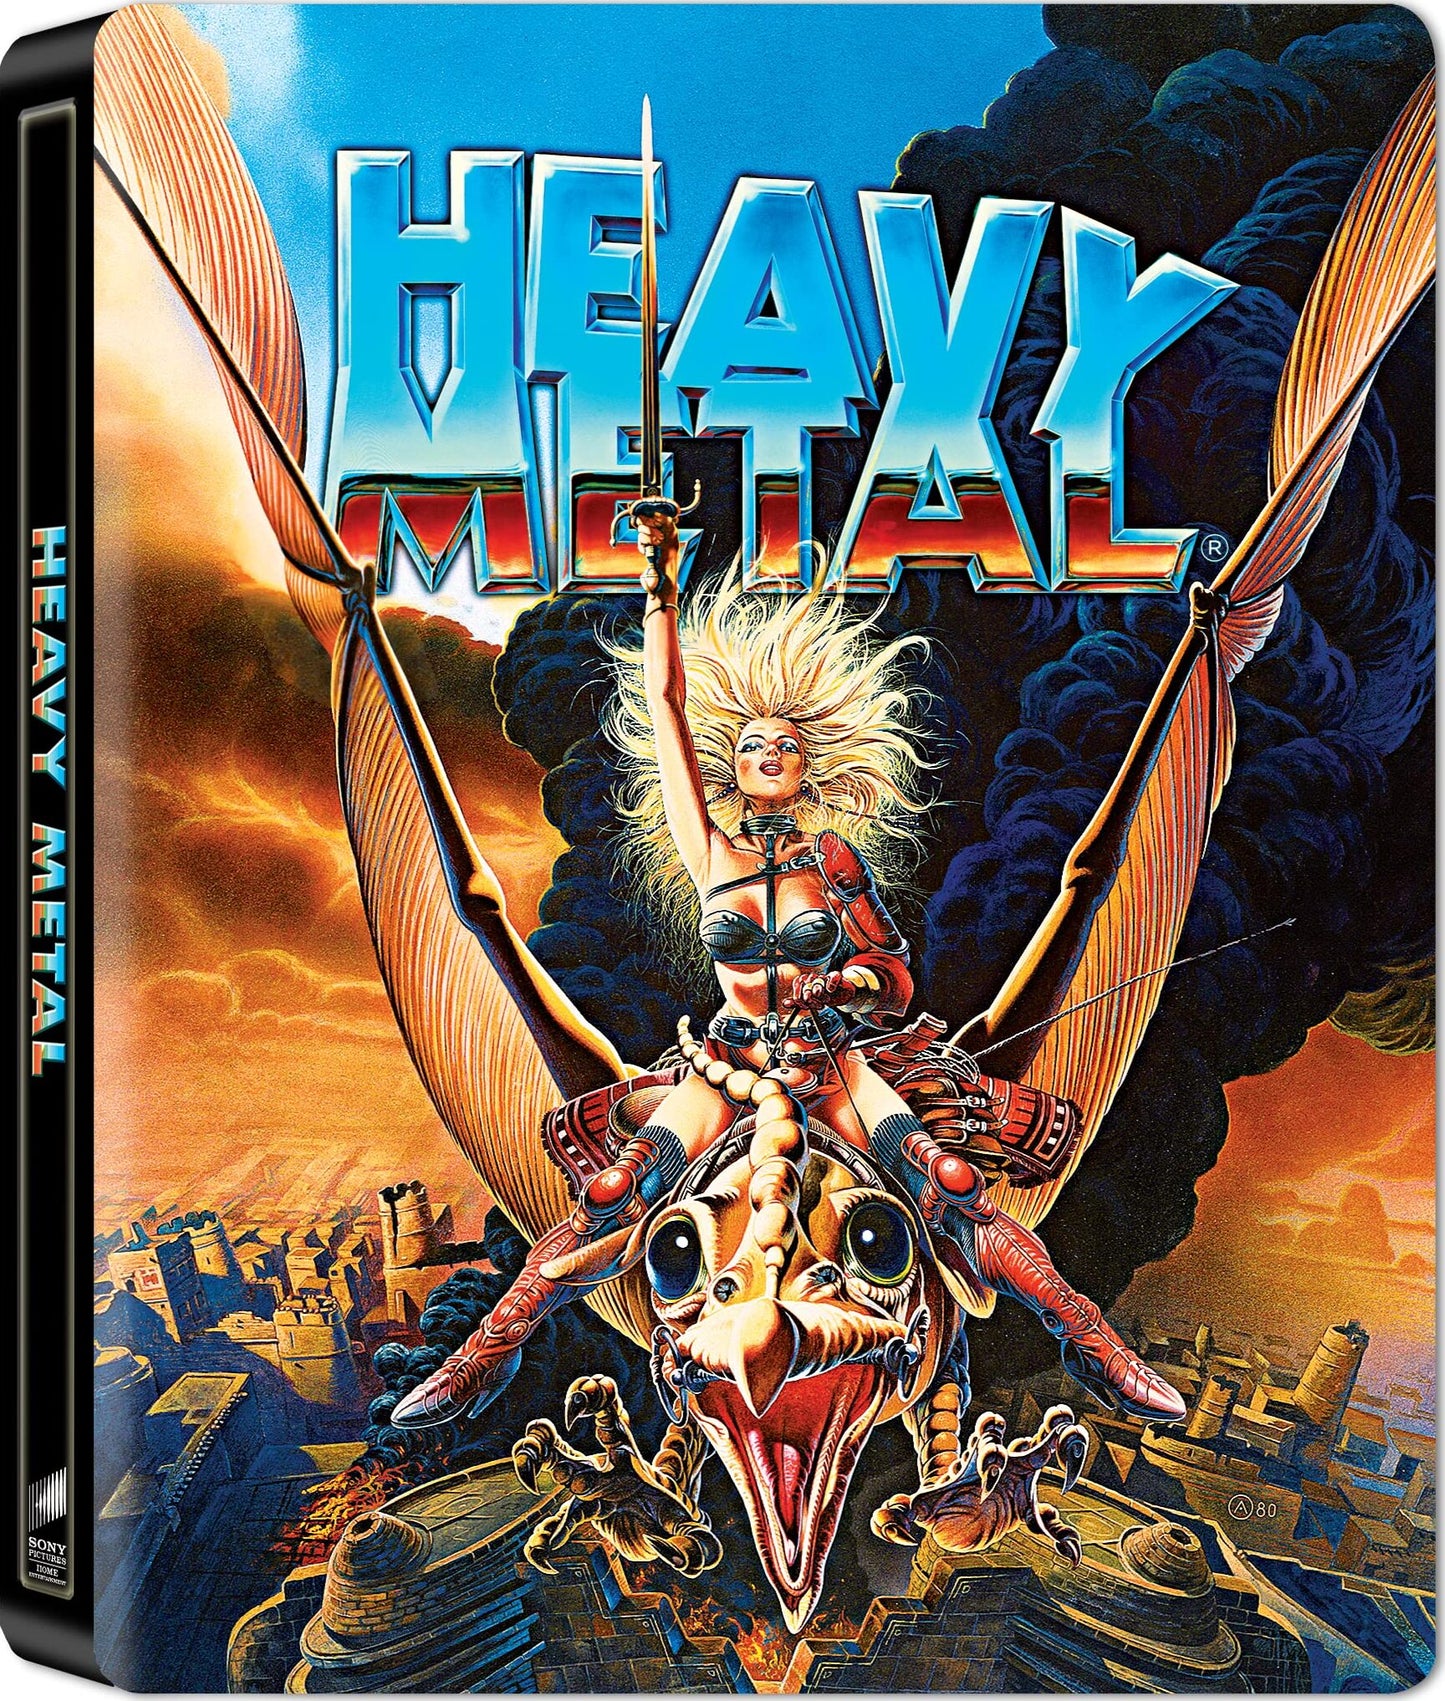 Heavy Metal / Heavy Metal 2000 4K SteelBook